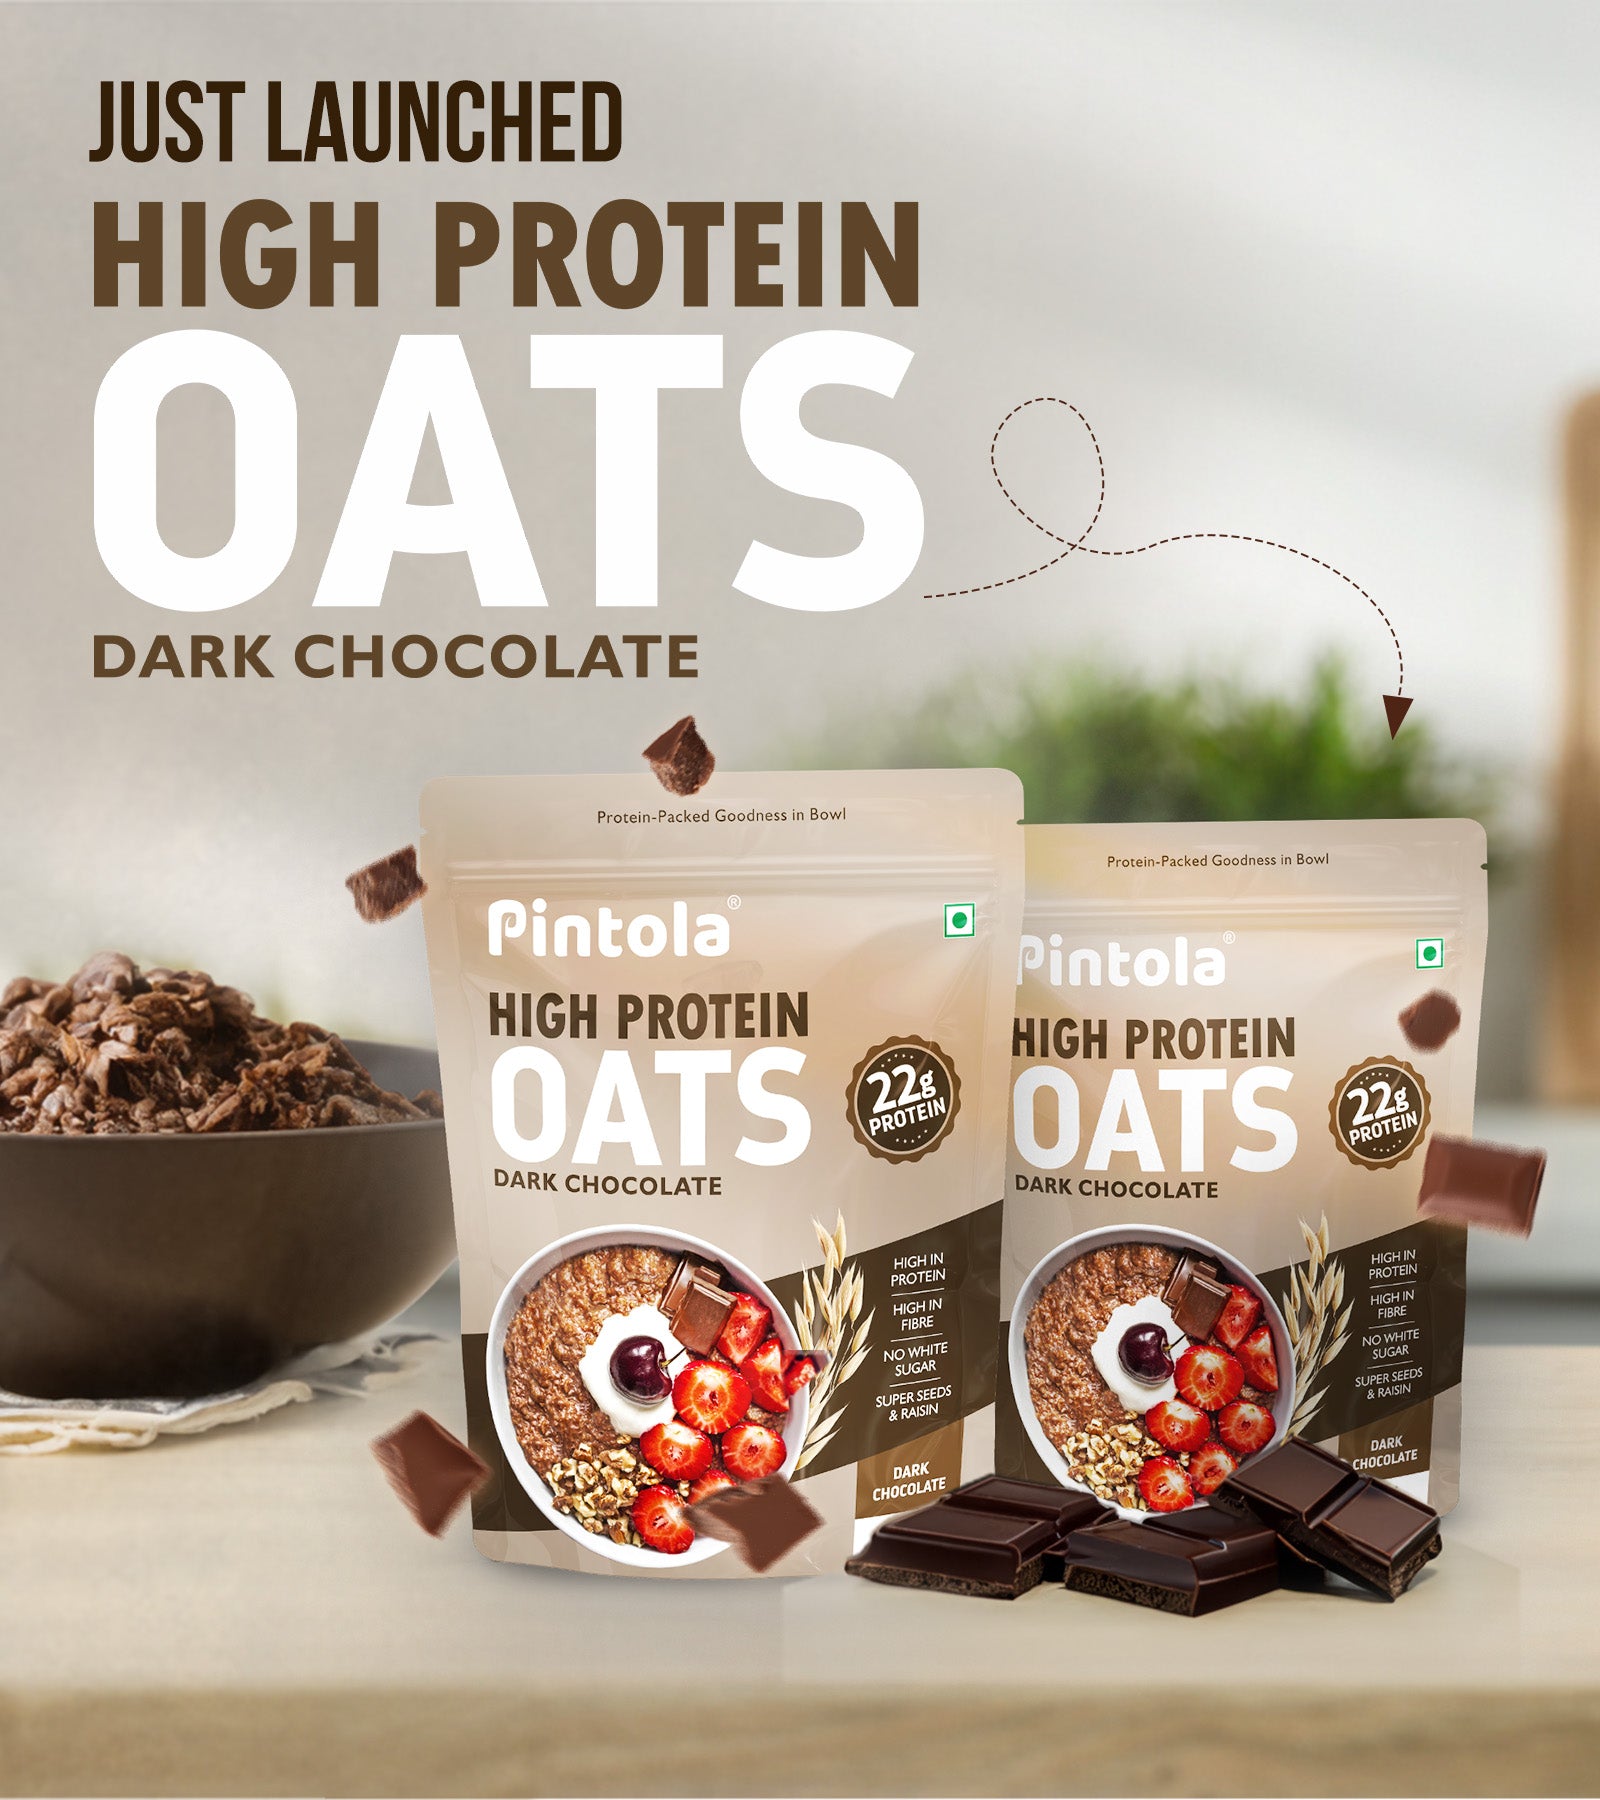 High Protein Oats, 2 kg Dark Chocolate Oats